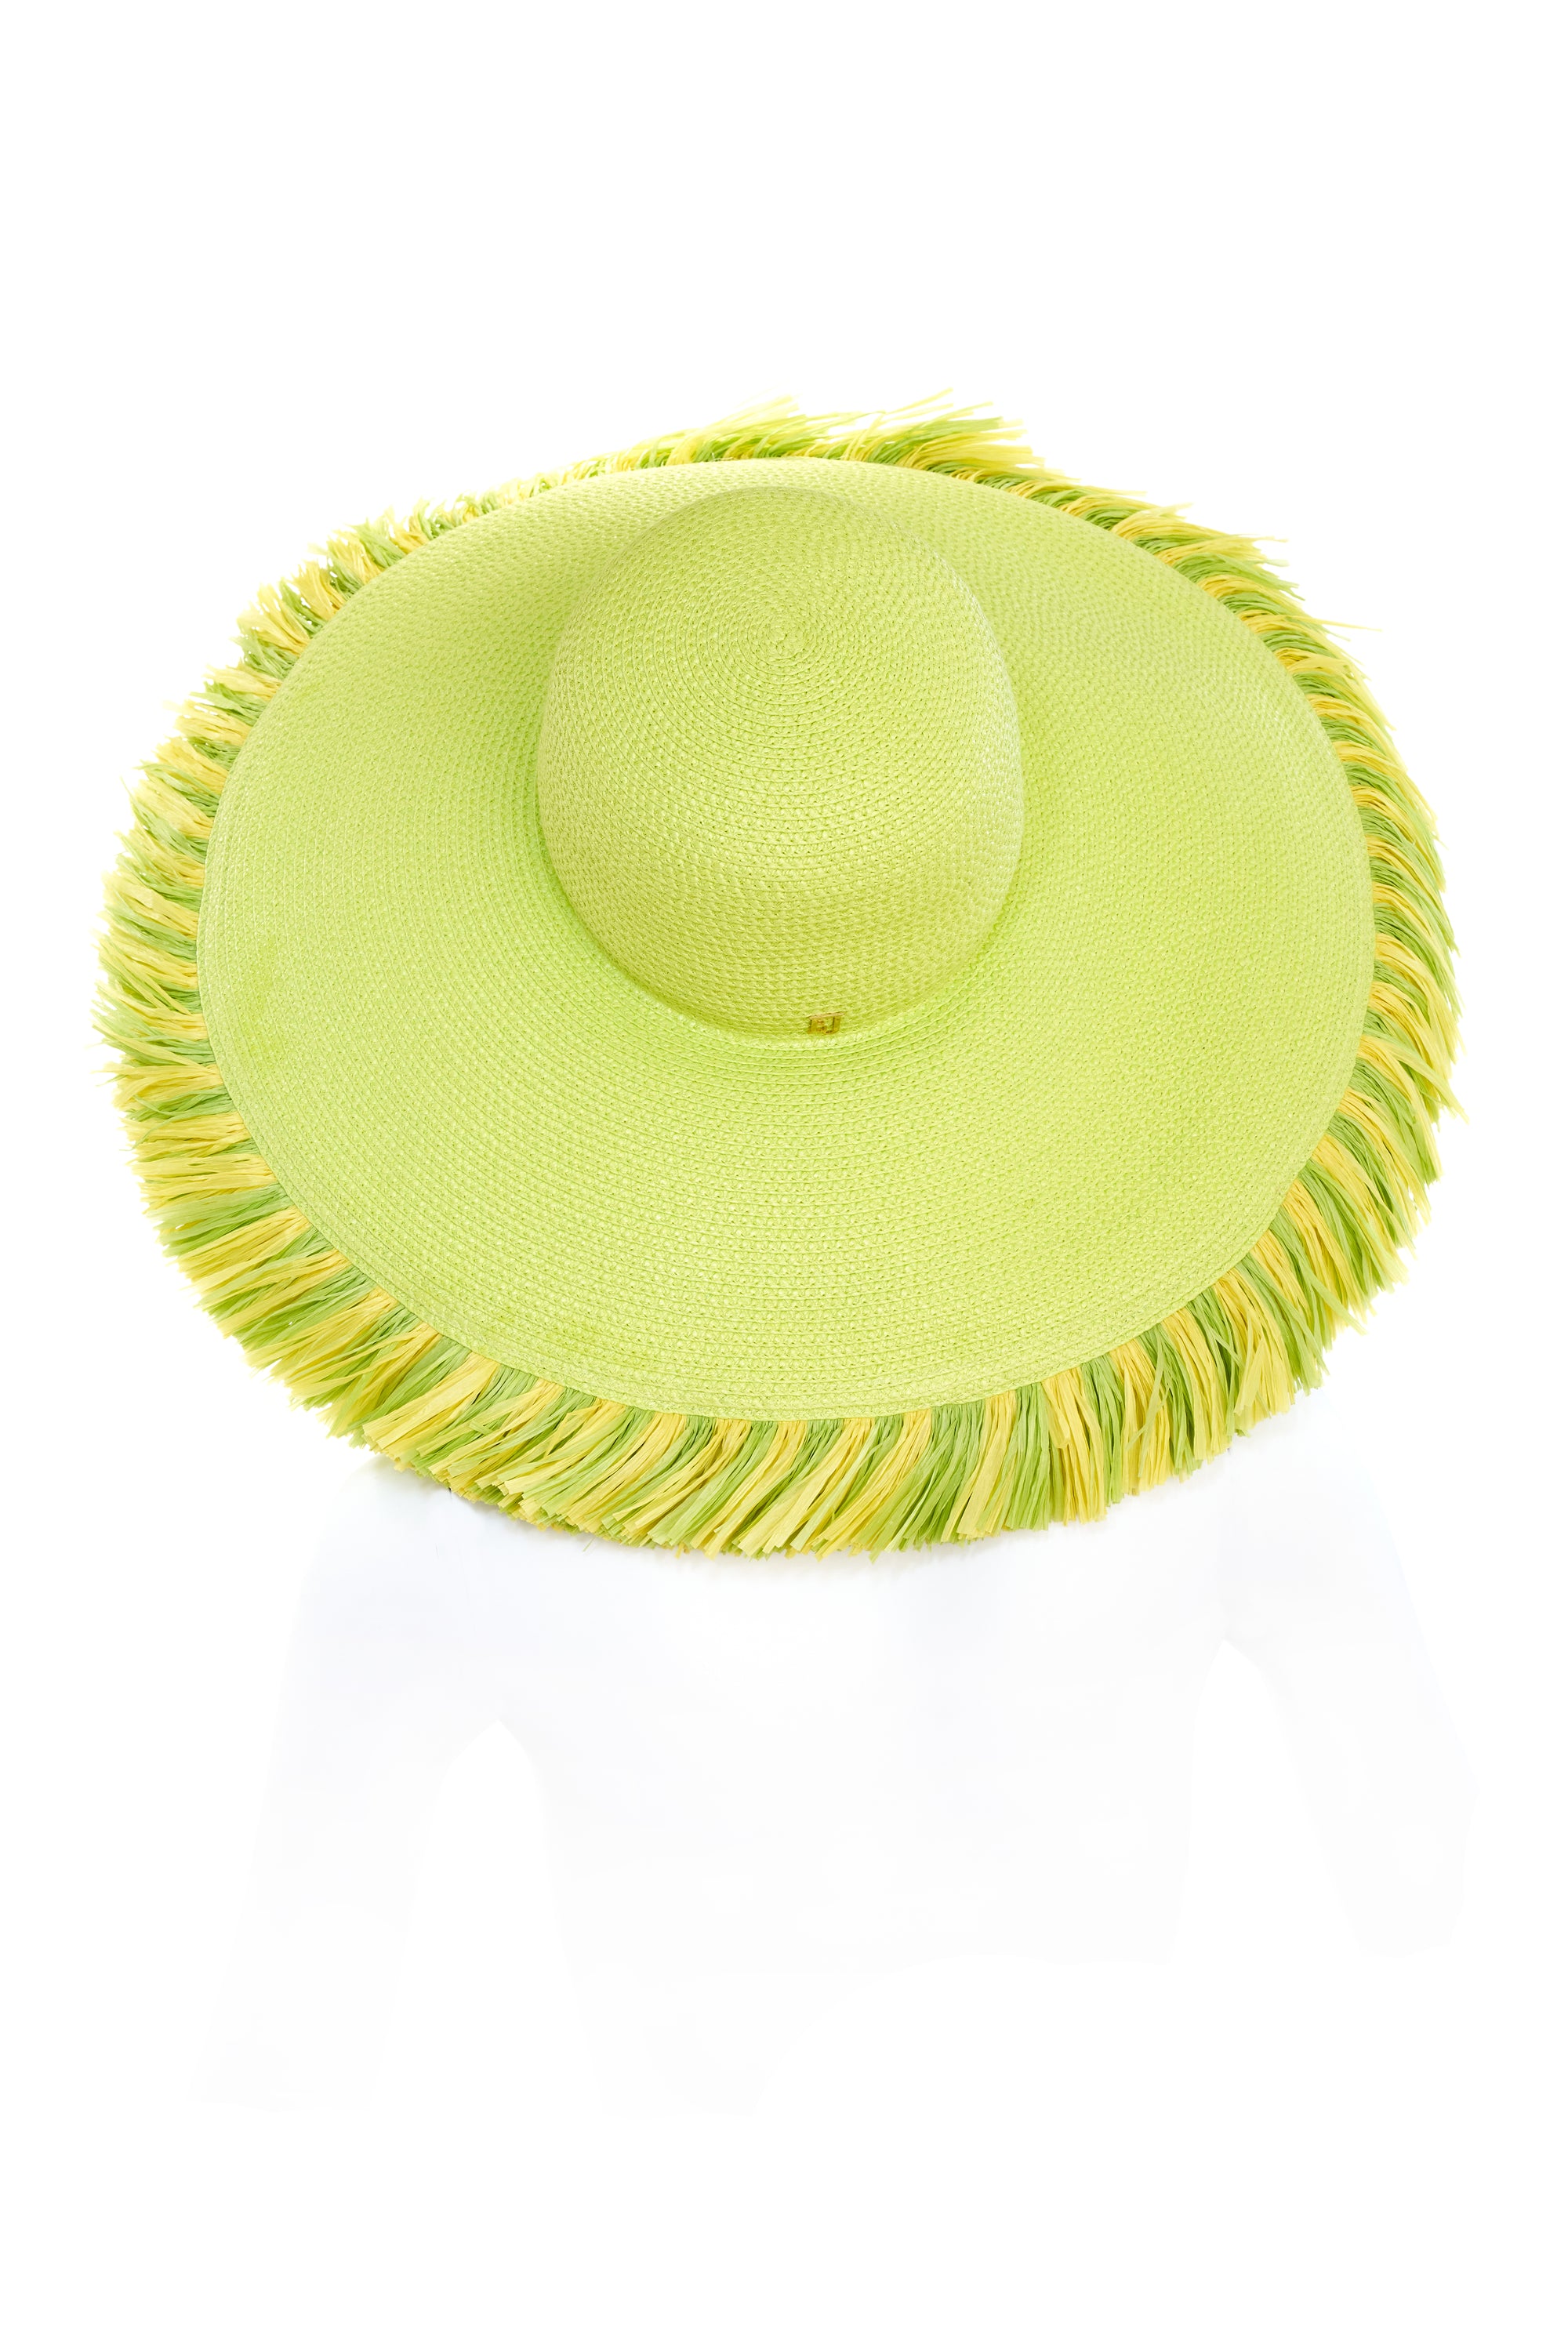 Eric Javits Lime Green Sun Hat